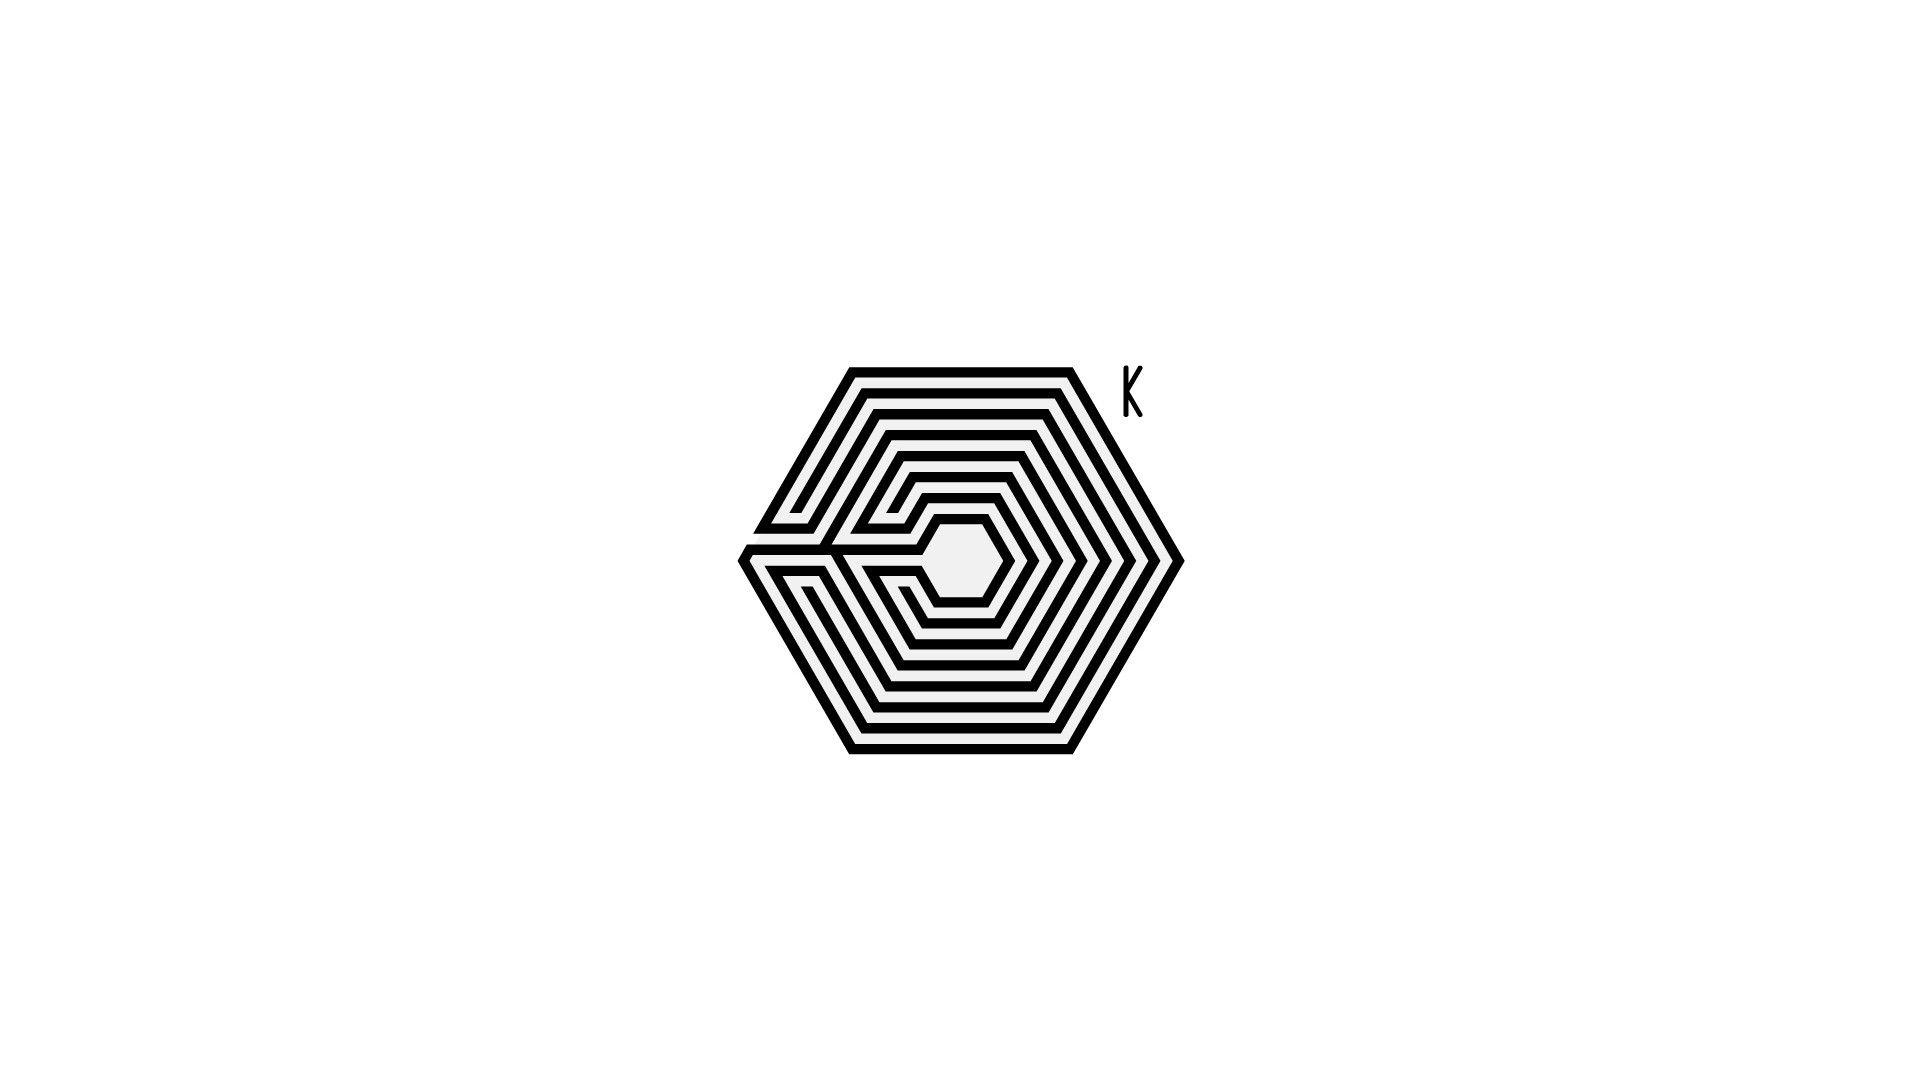  EXO  Logo Wallpapers  Wallpaper  Cave